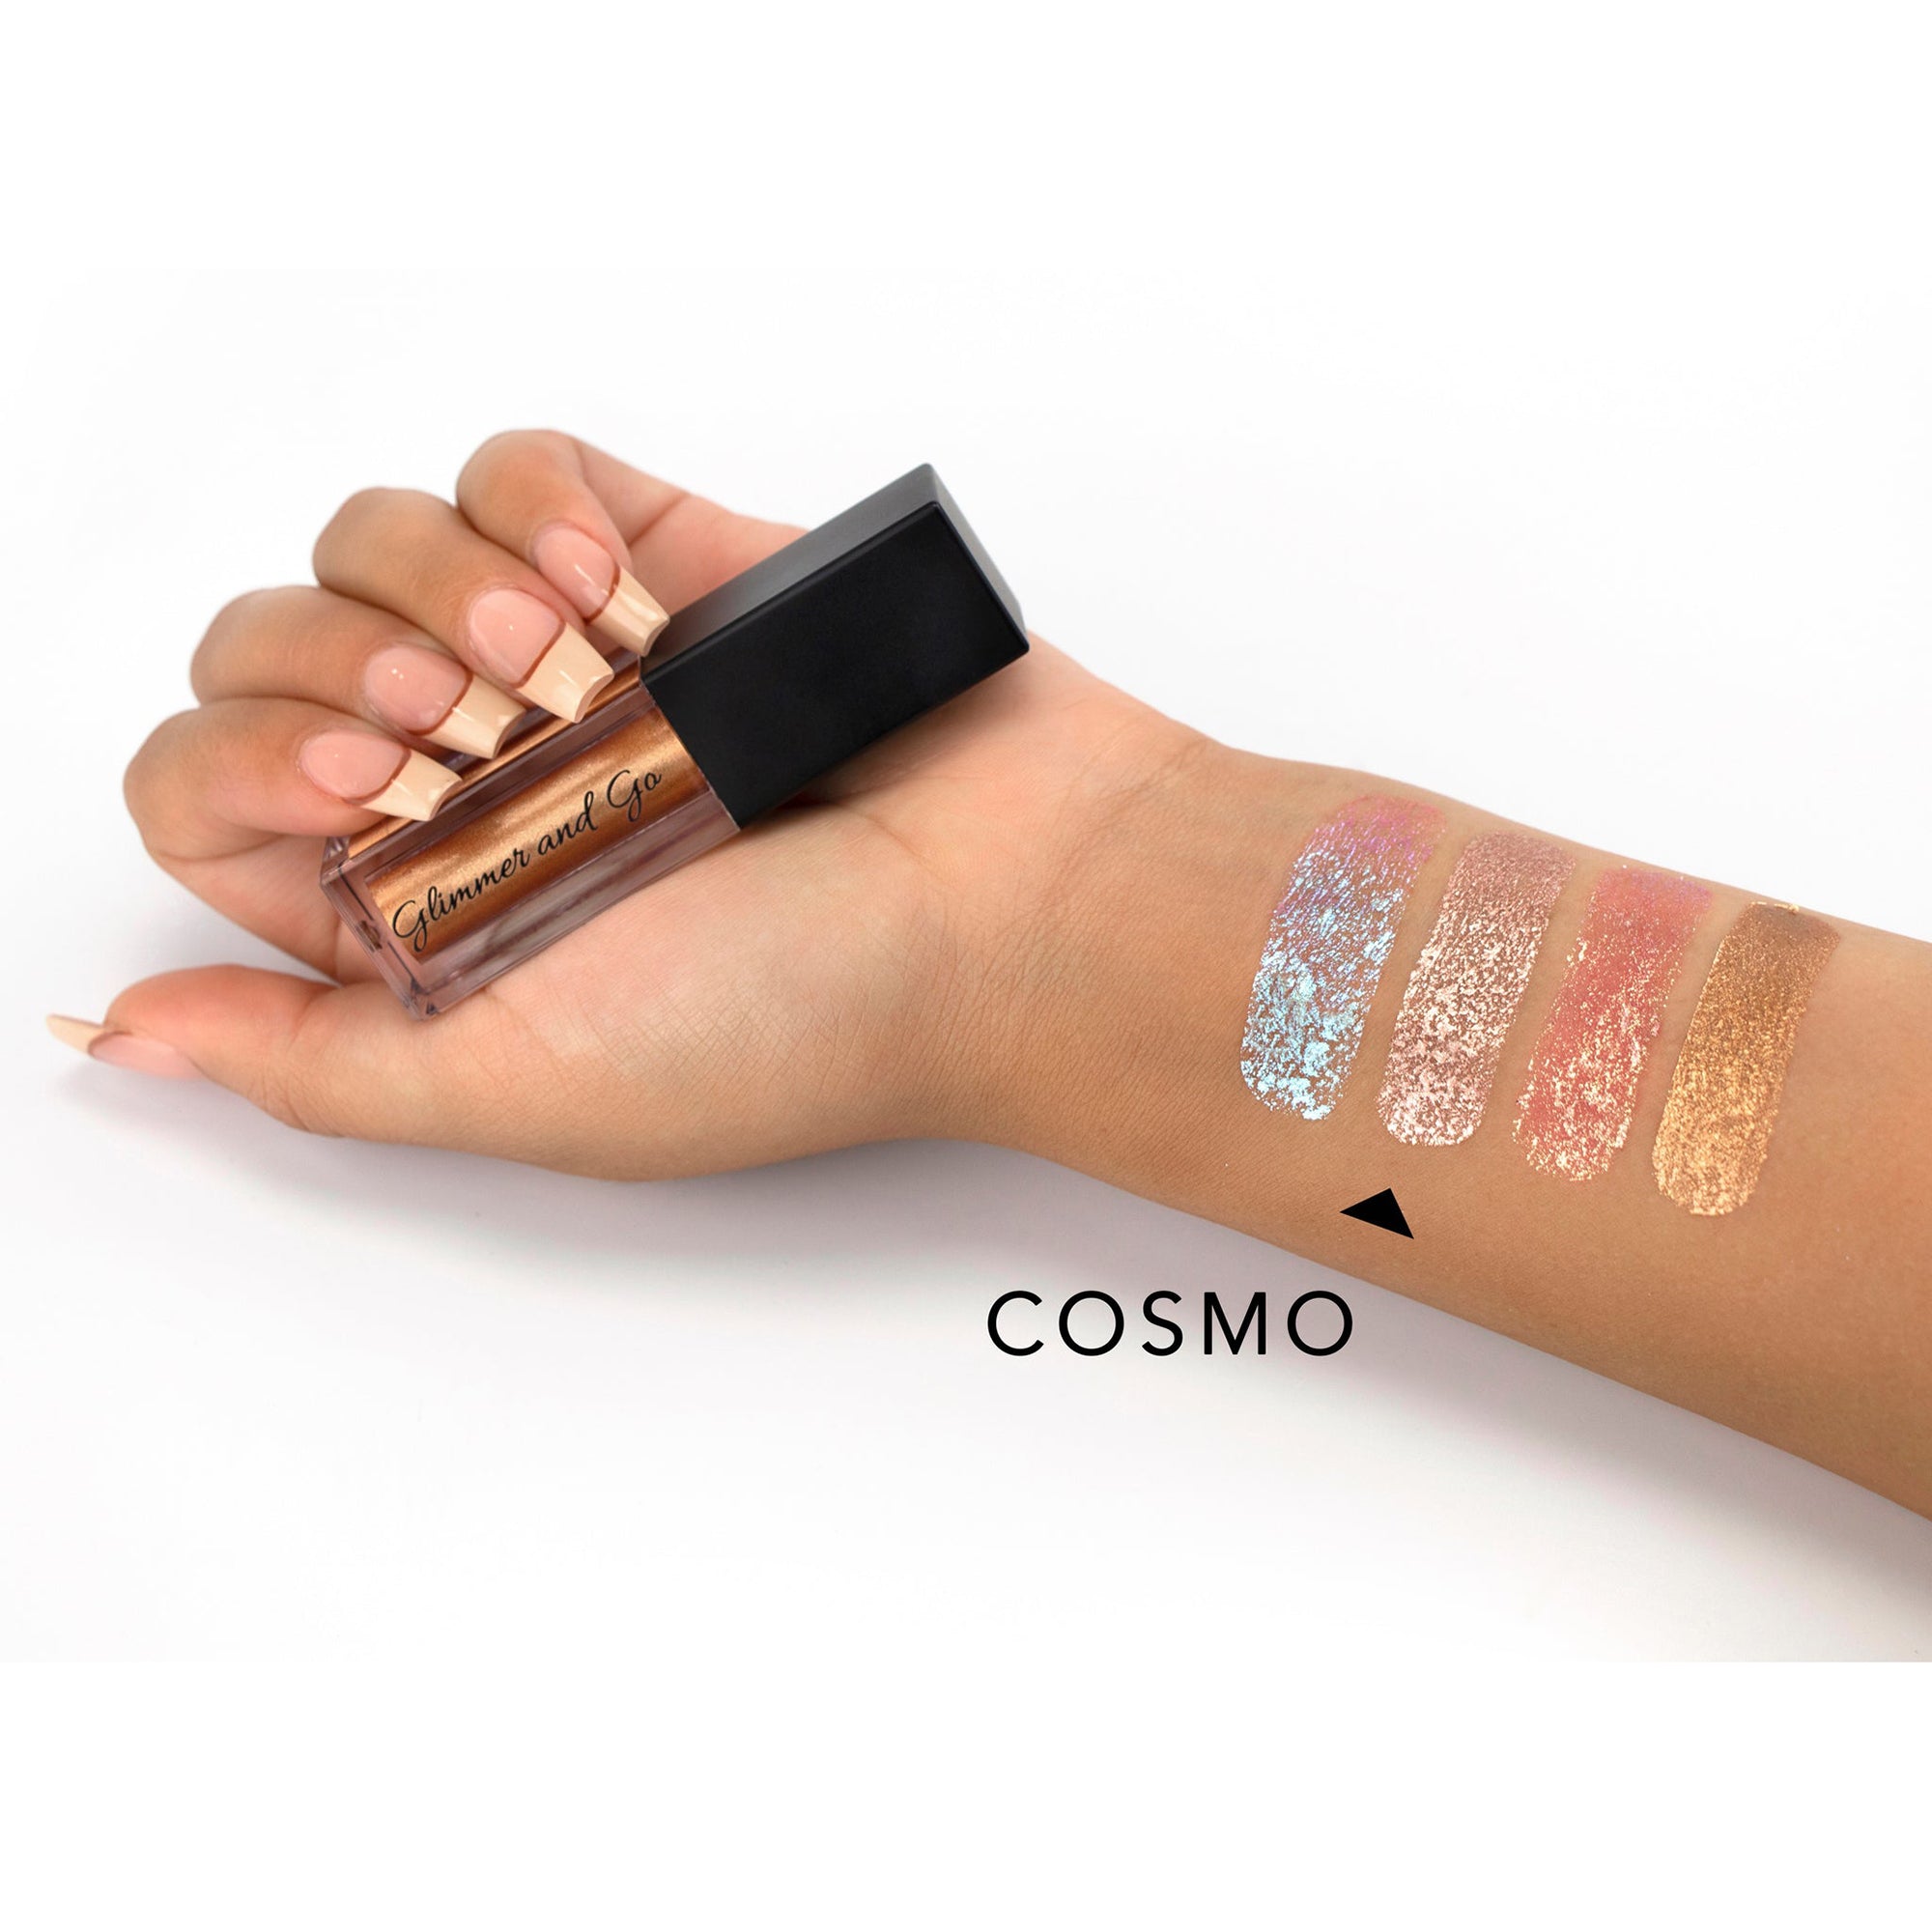 Frankie Rose Glimmer and Go Liquid Glitter Eyeshadow / Cosmo